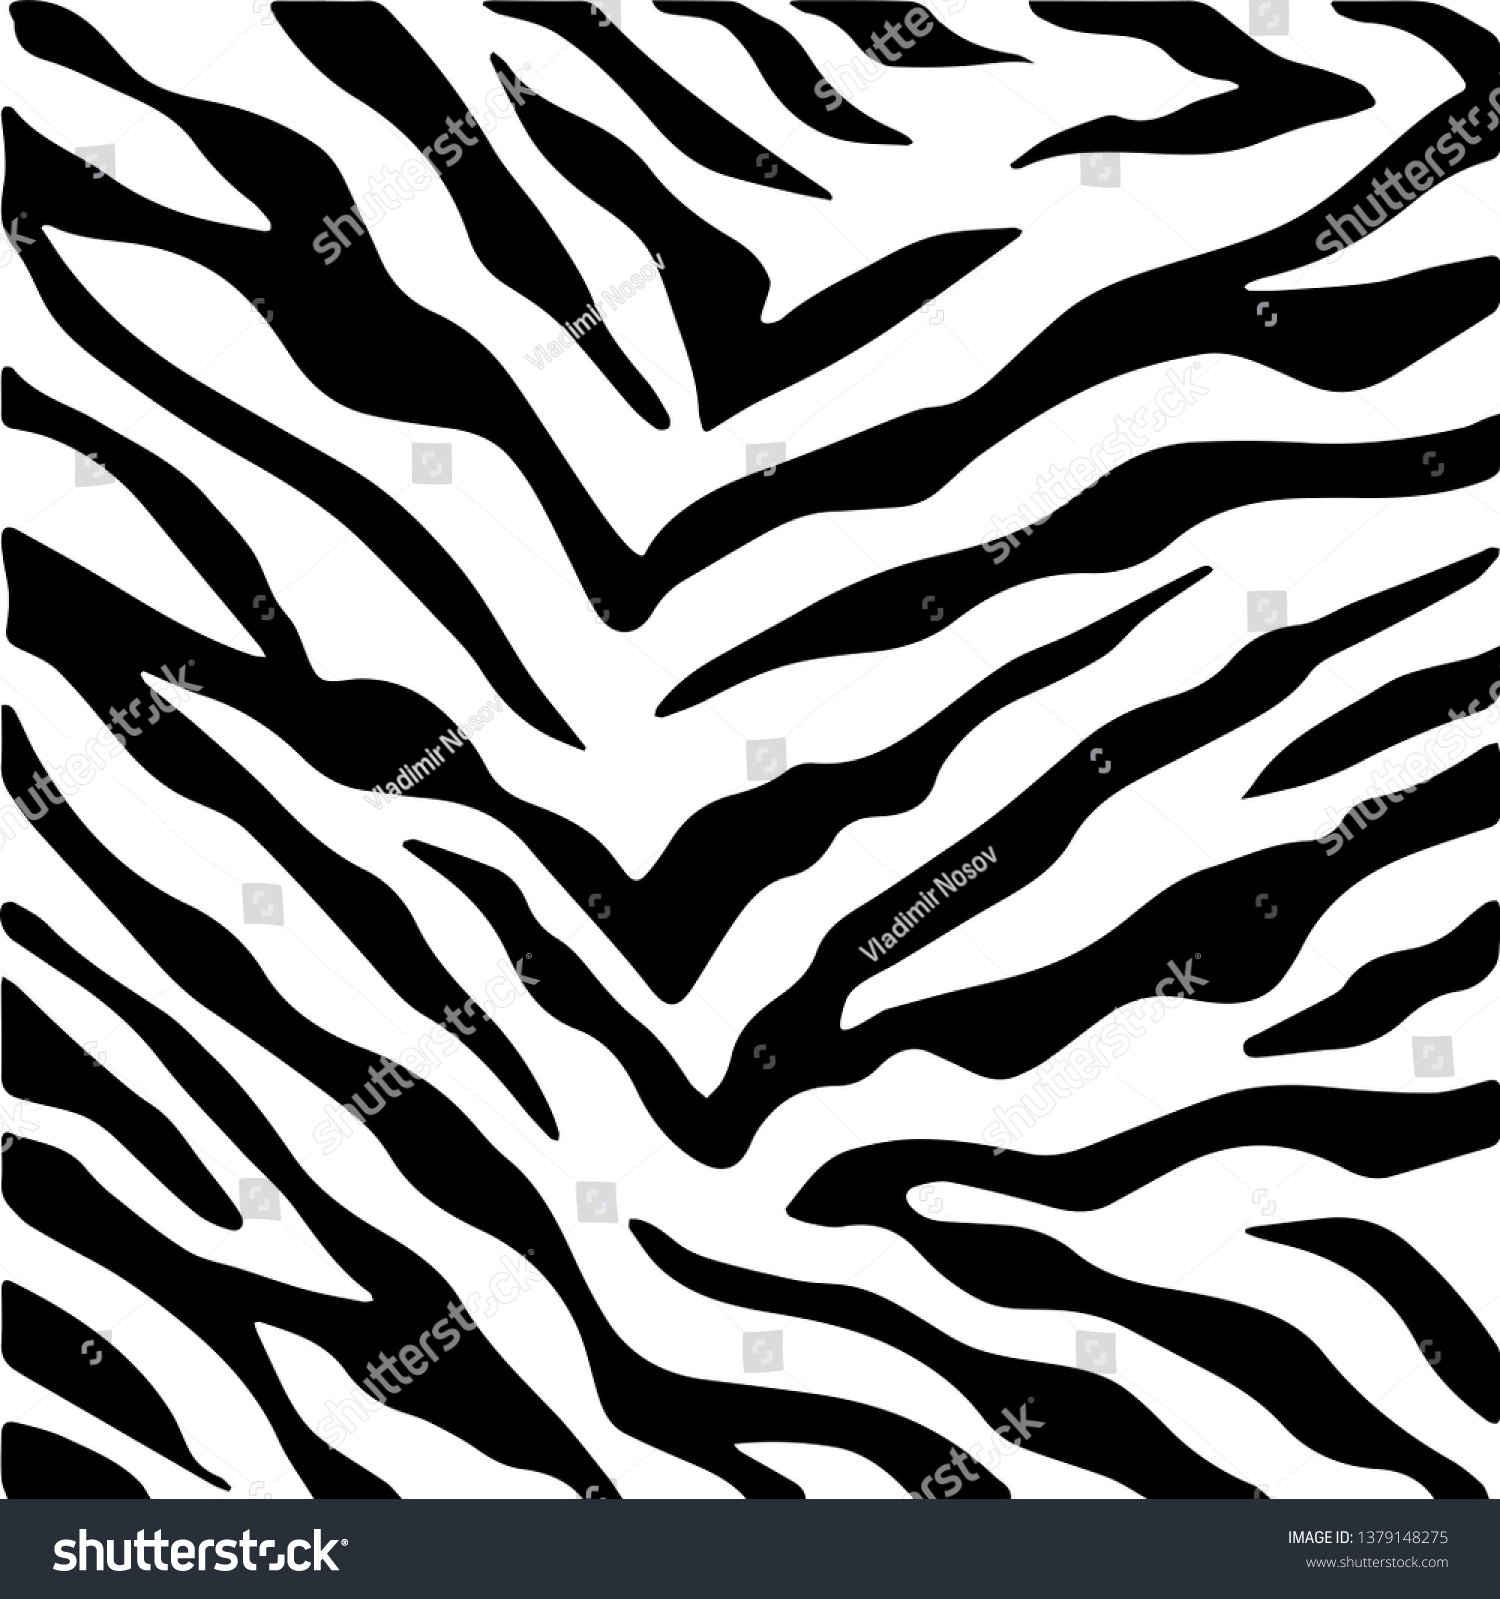 Tiger stripes ebony